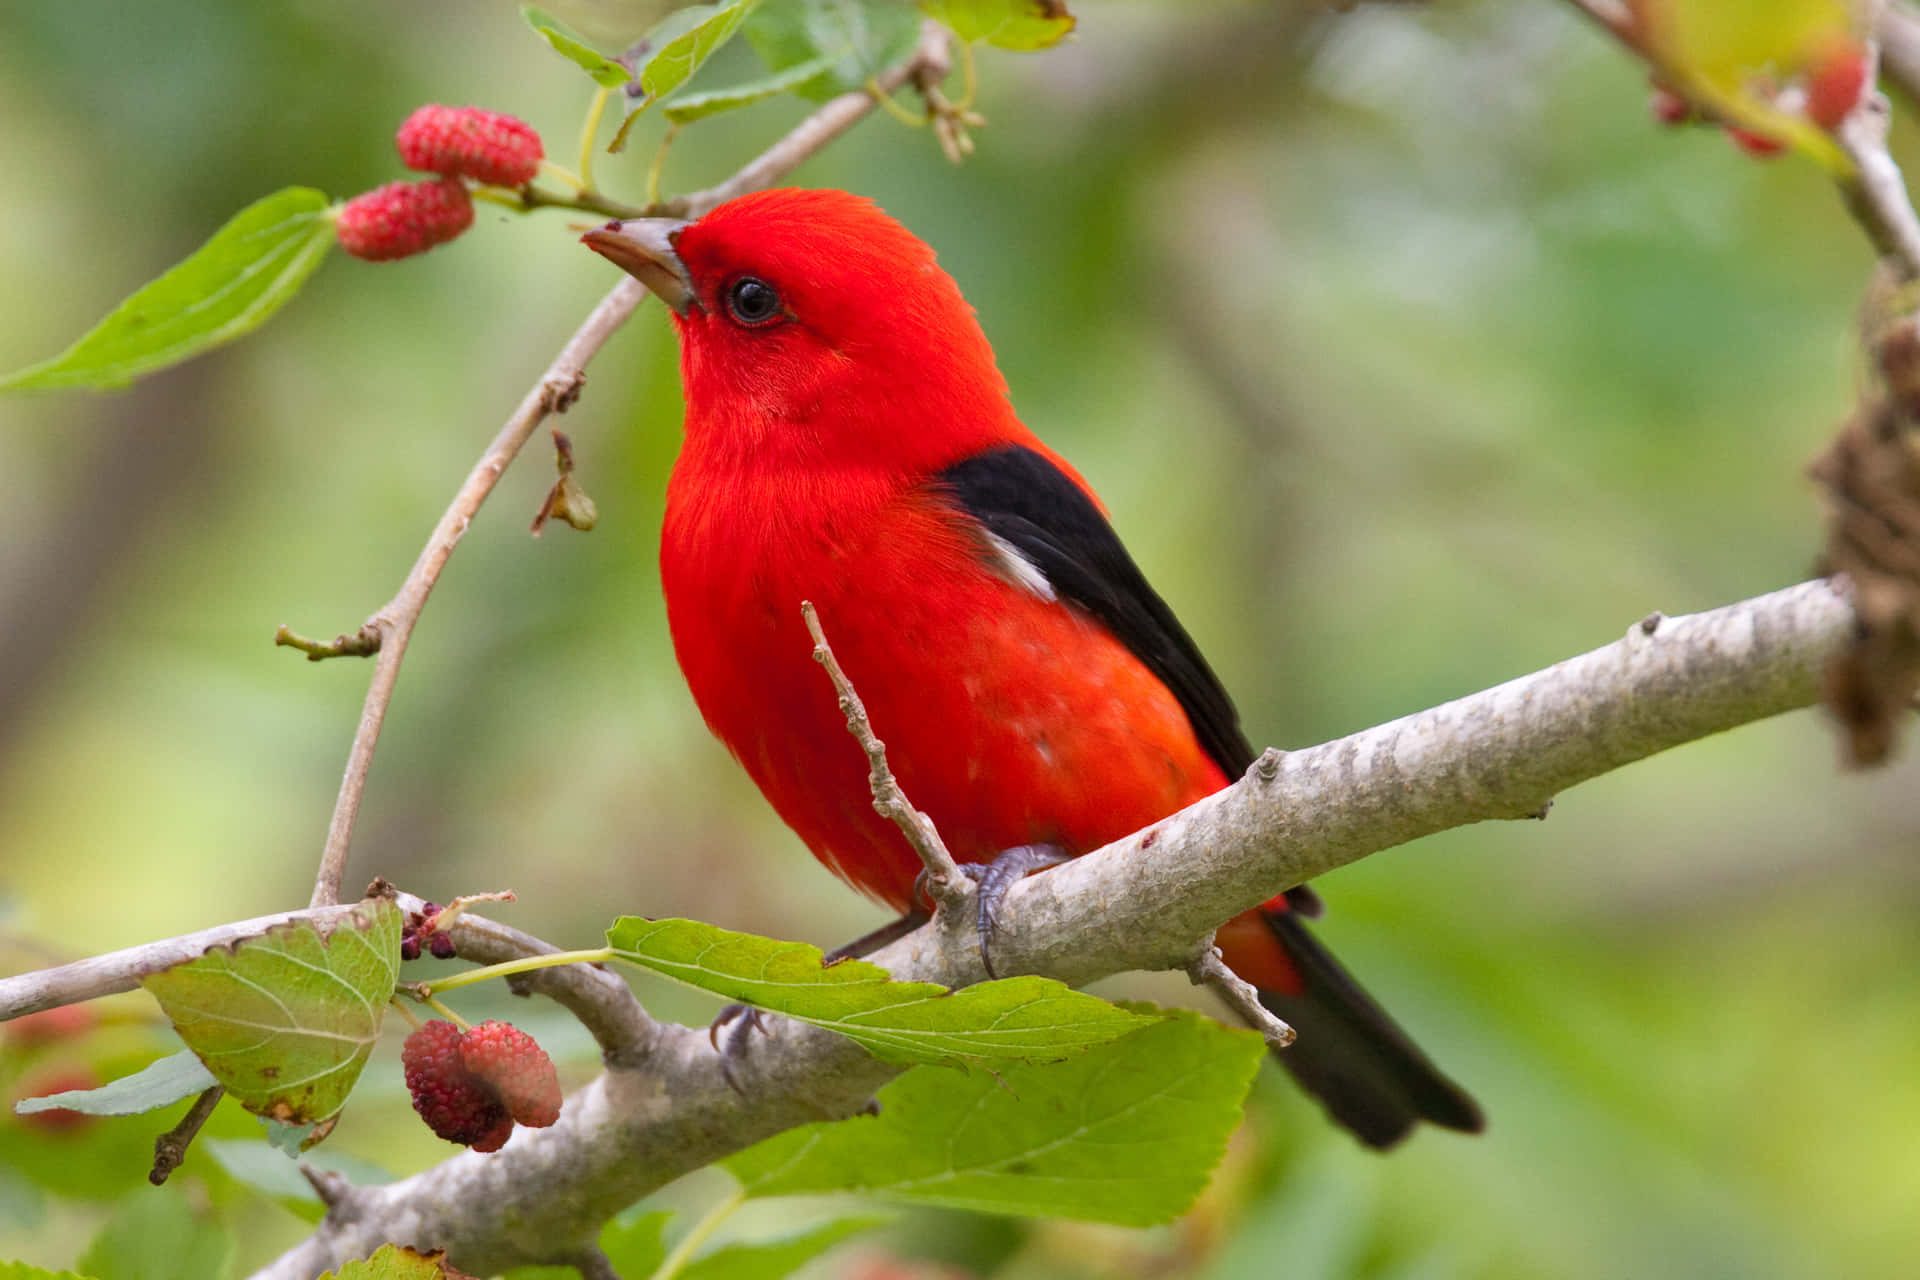 A beautiful bird perched atop a branch enjoying nature